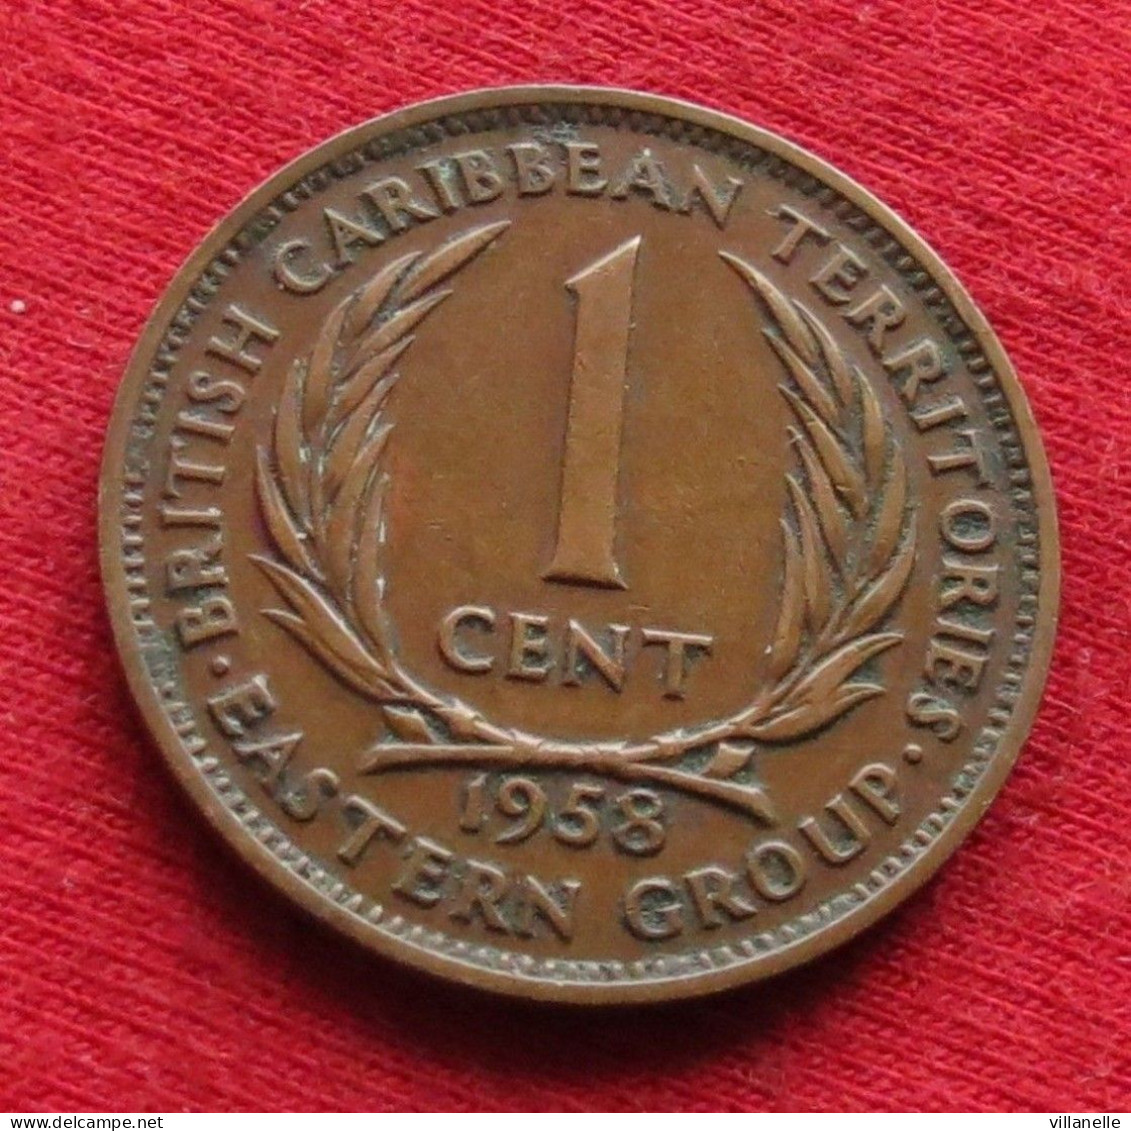 East Caribbean States 1 Cent 1958 KM# 2 *VT British Caribbean Territories Caraibas Caraibes Orientales - Britse-karibisher Territorien